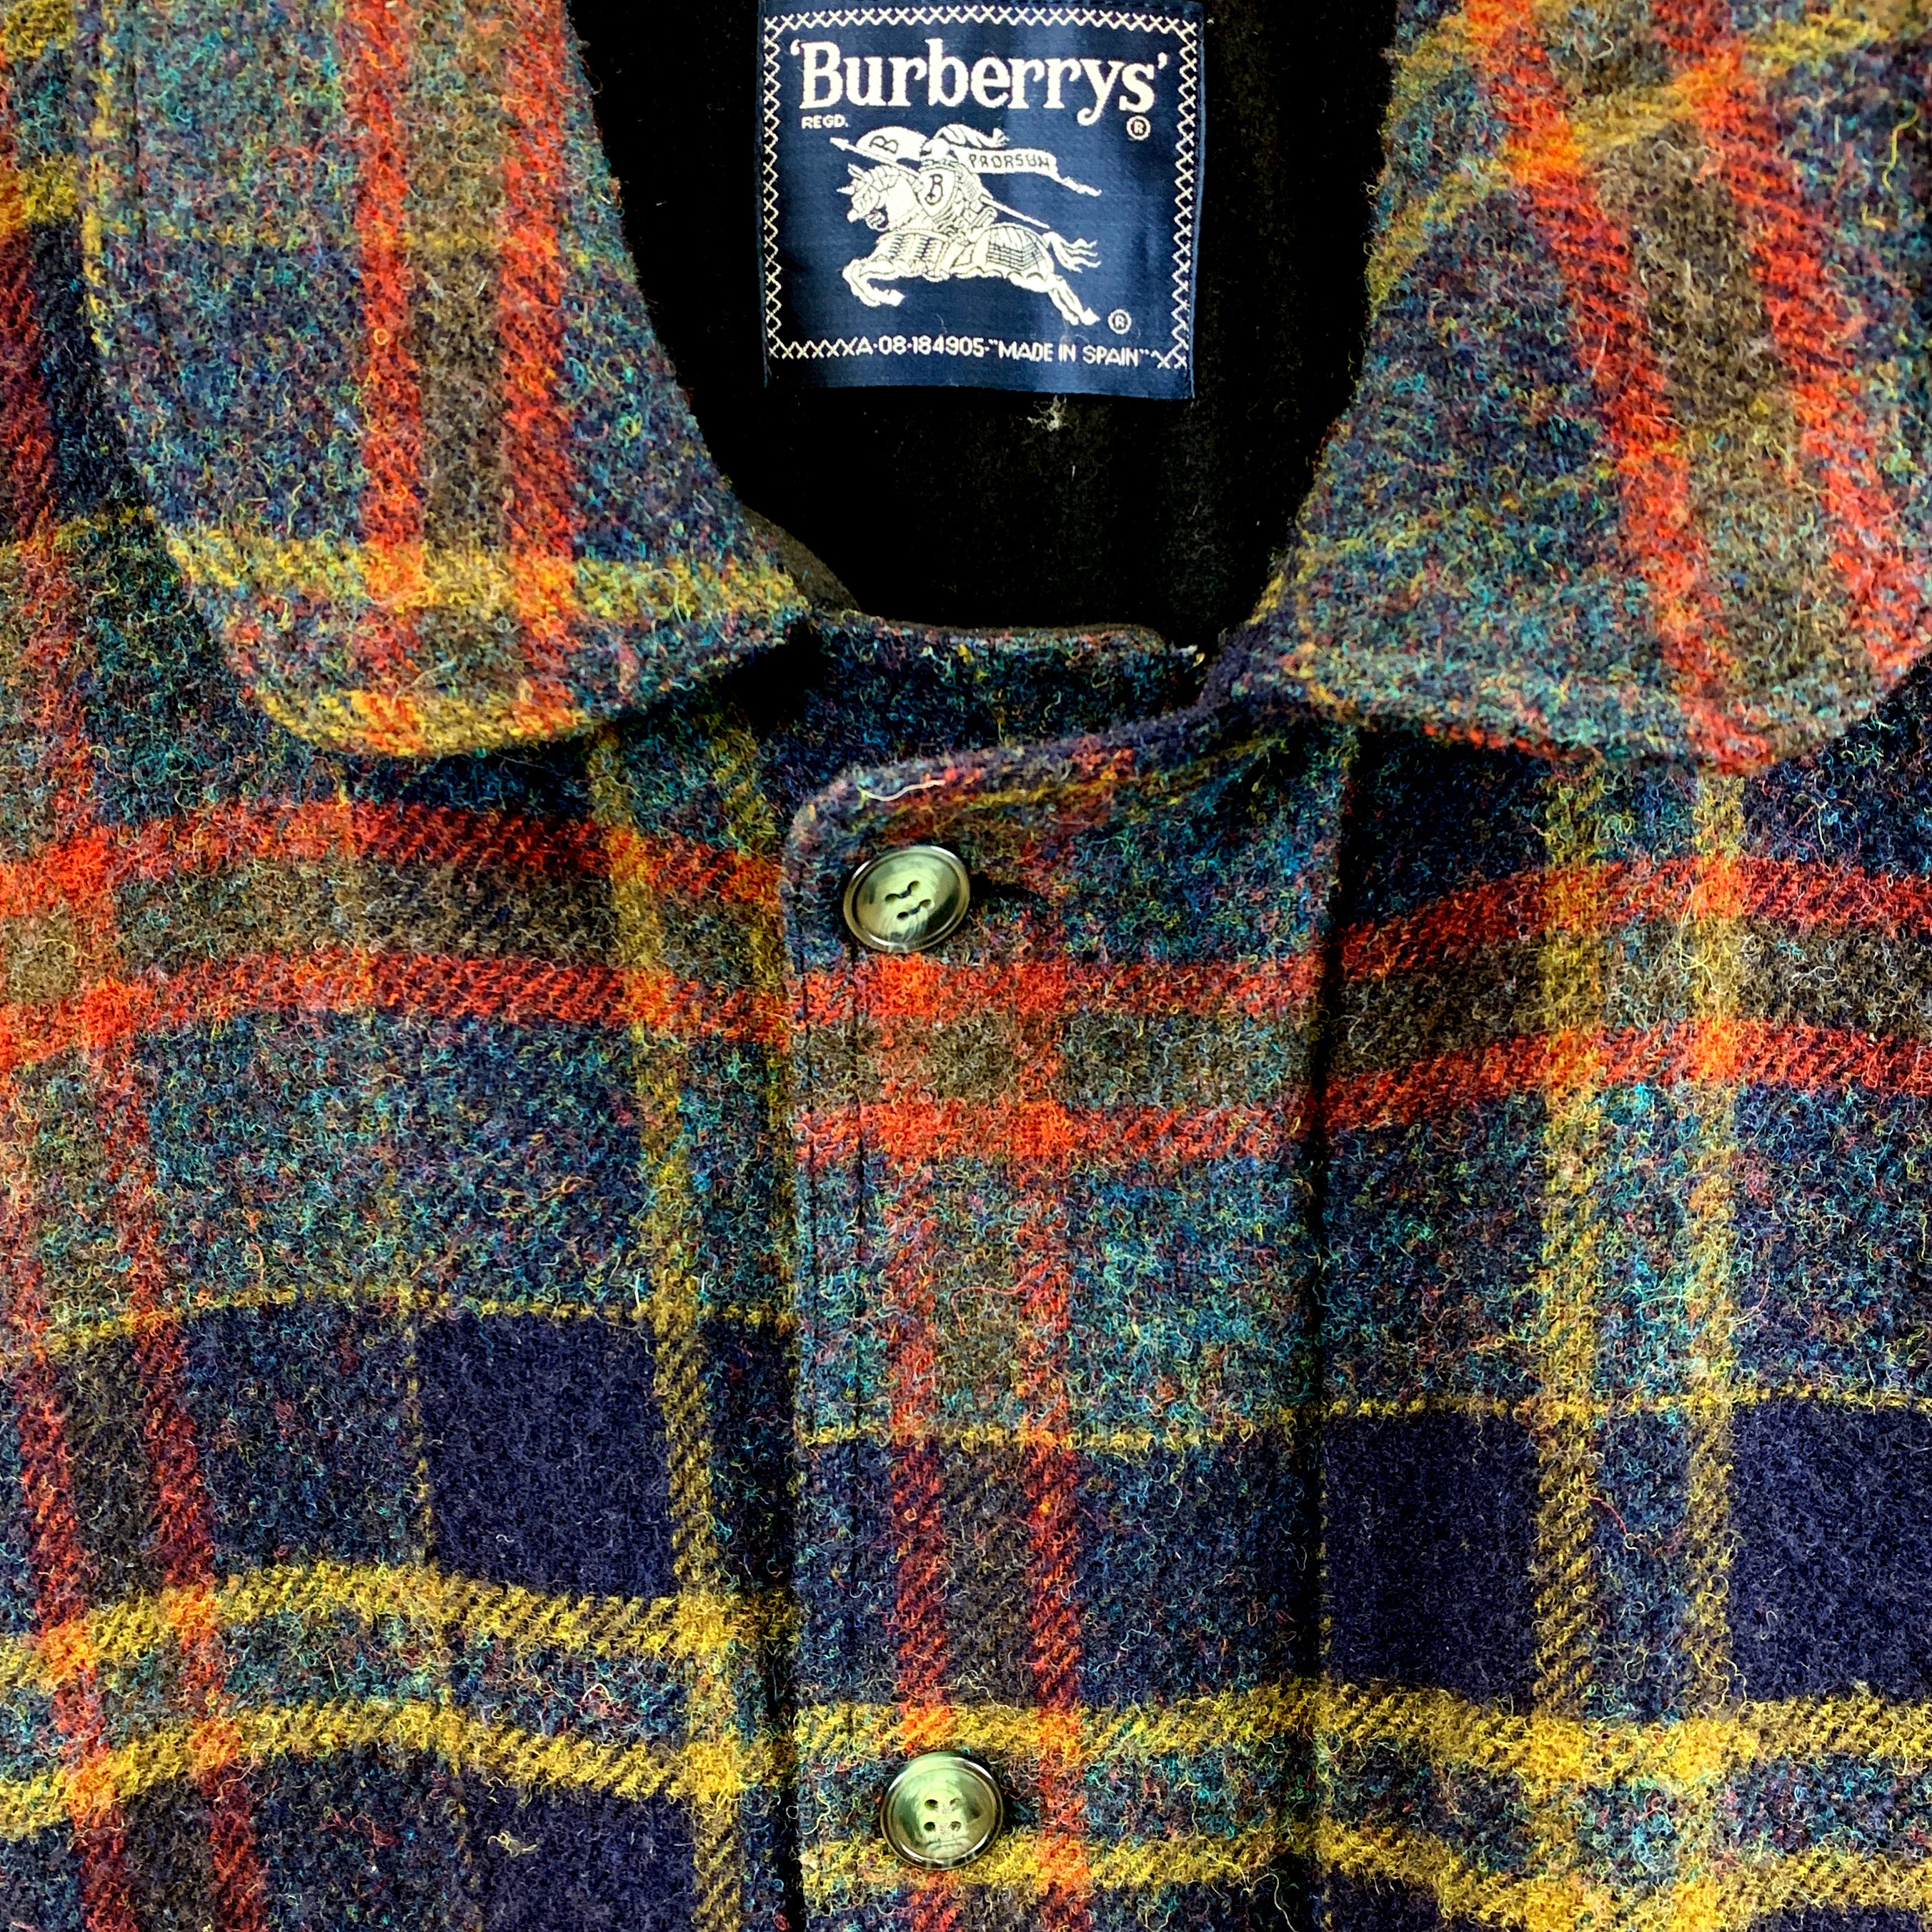 Burberry Tartan Wool Coat/Jacket